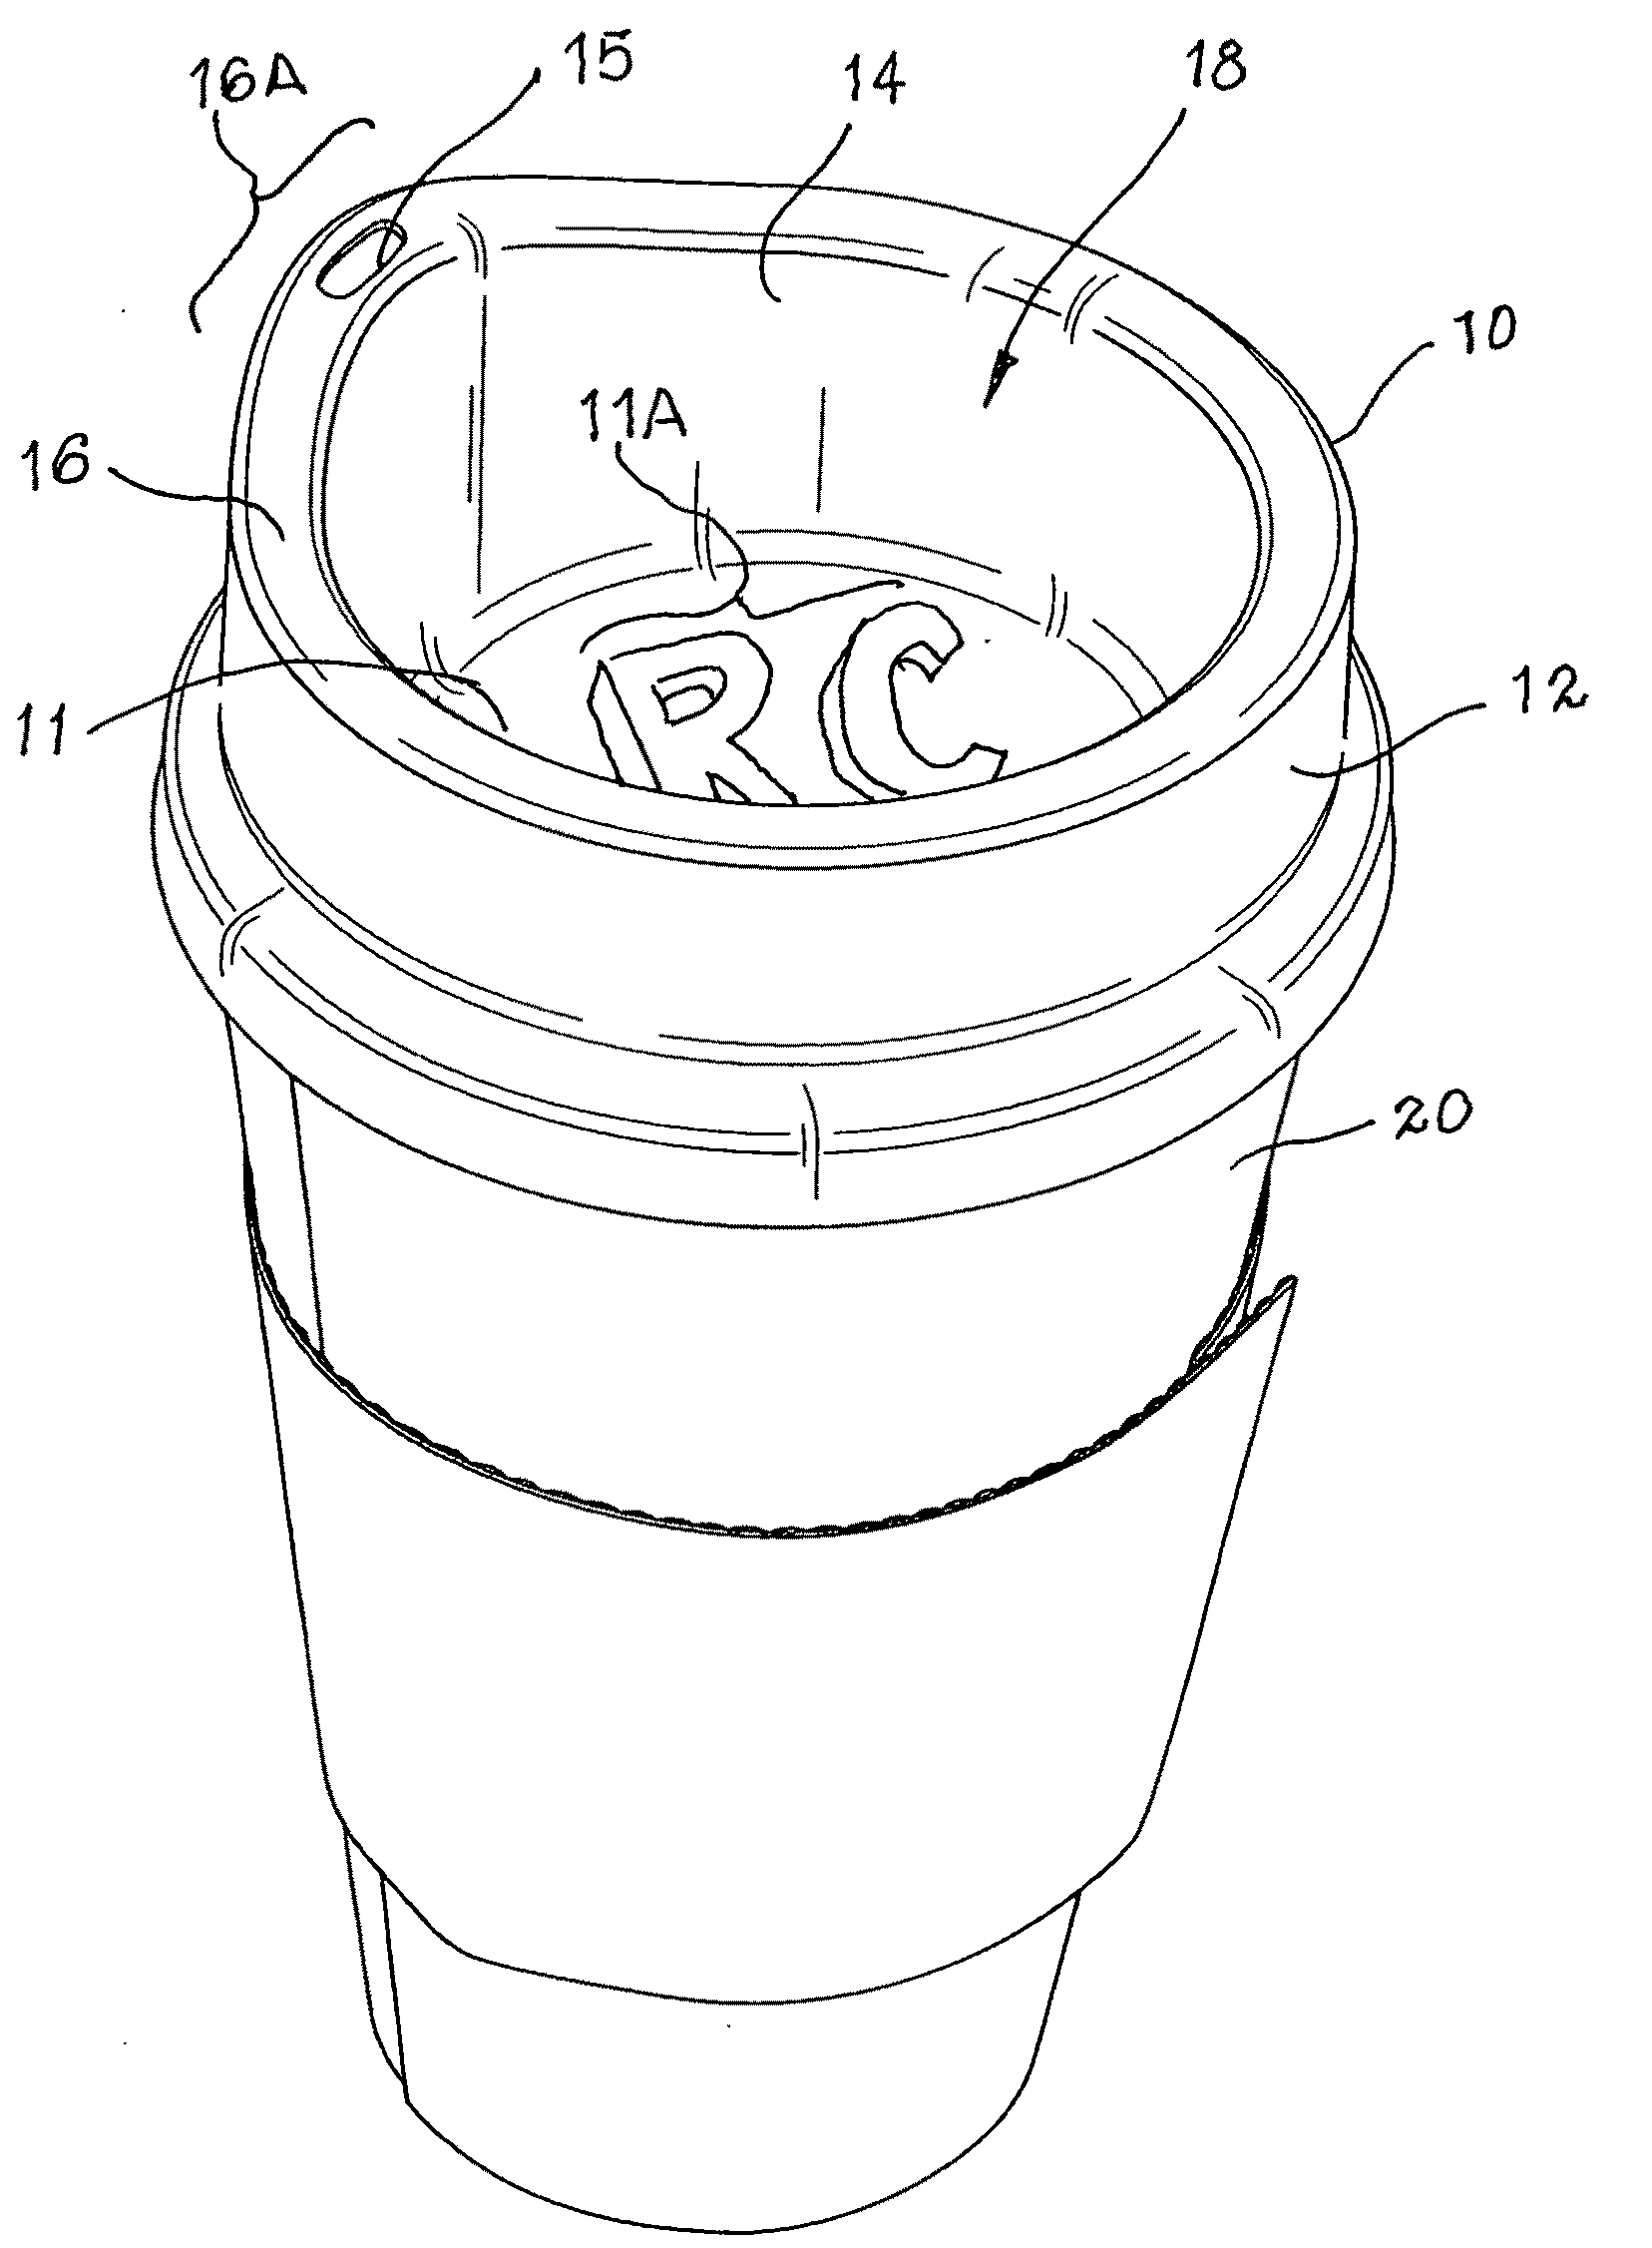 Cup lid with an anti-splash ergonomic shape